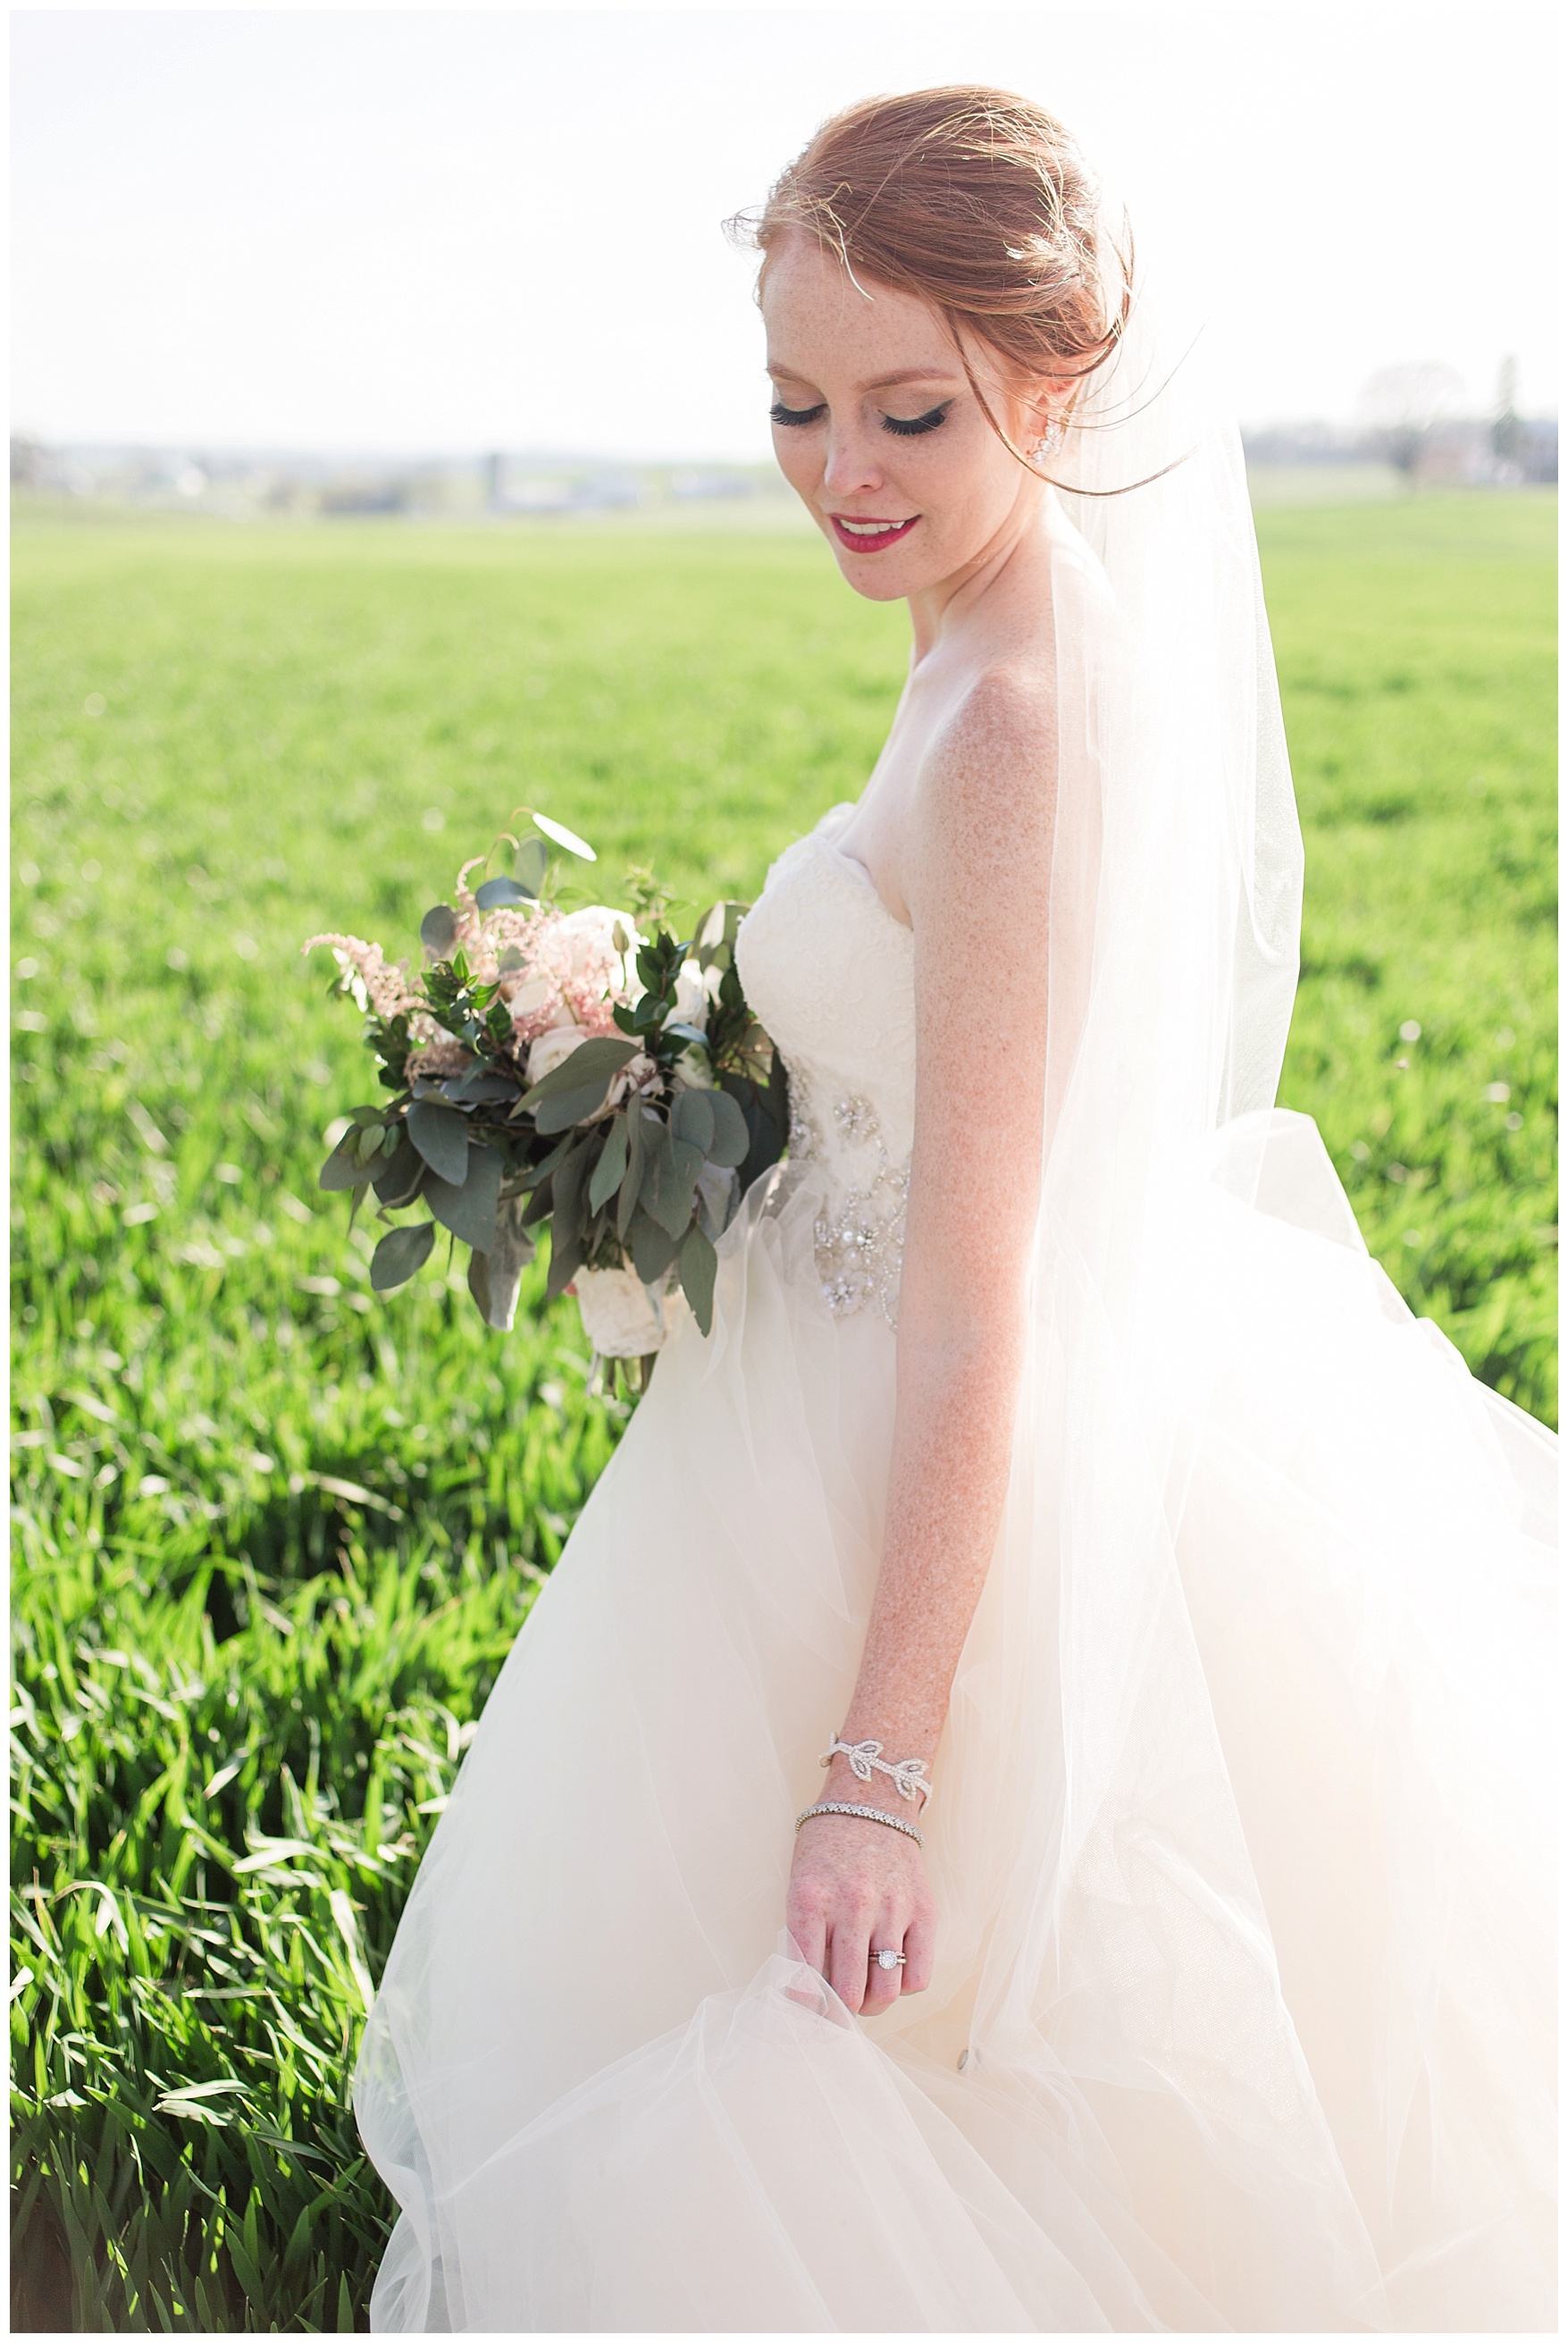 On the Sunny Slope Farm Wedding  || Harrisonburg, Virginia Wedding Photographer || Lynchburg VA Photographer 